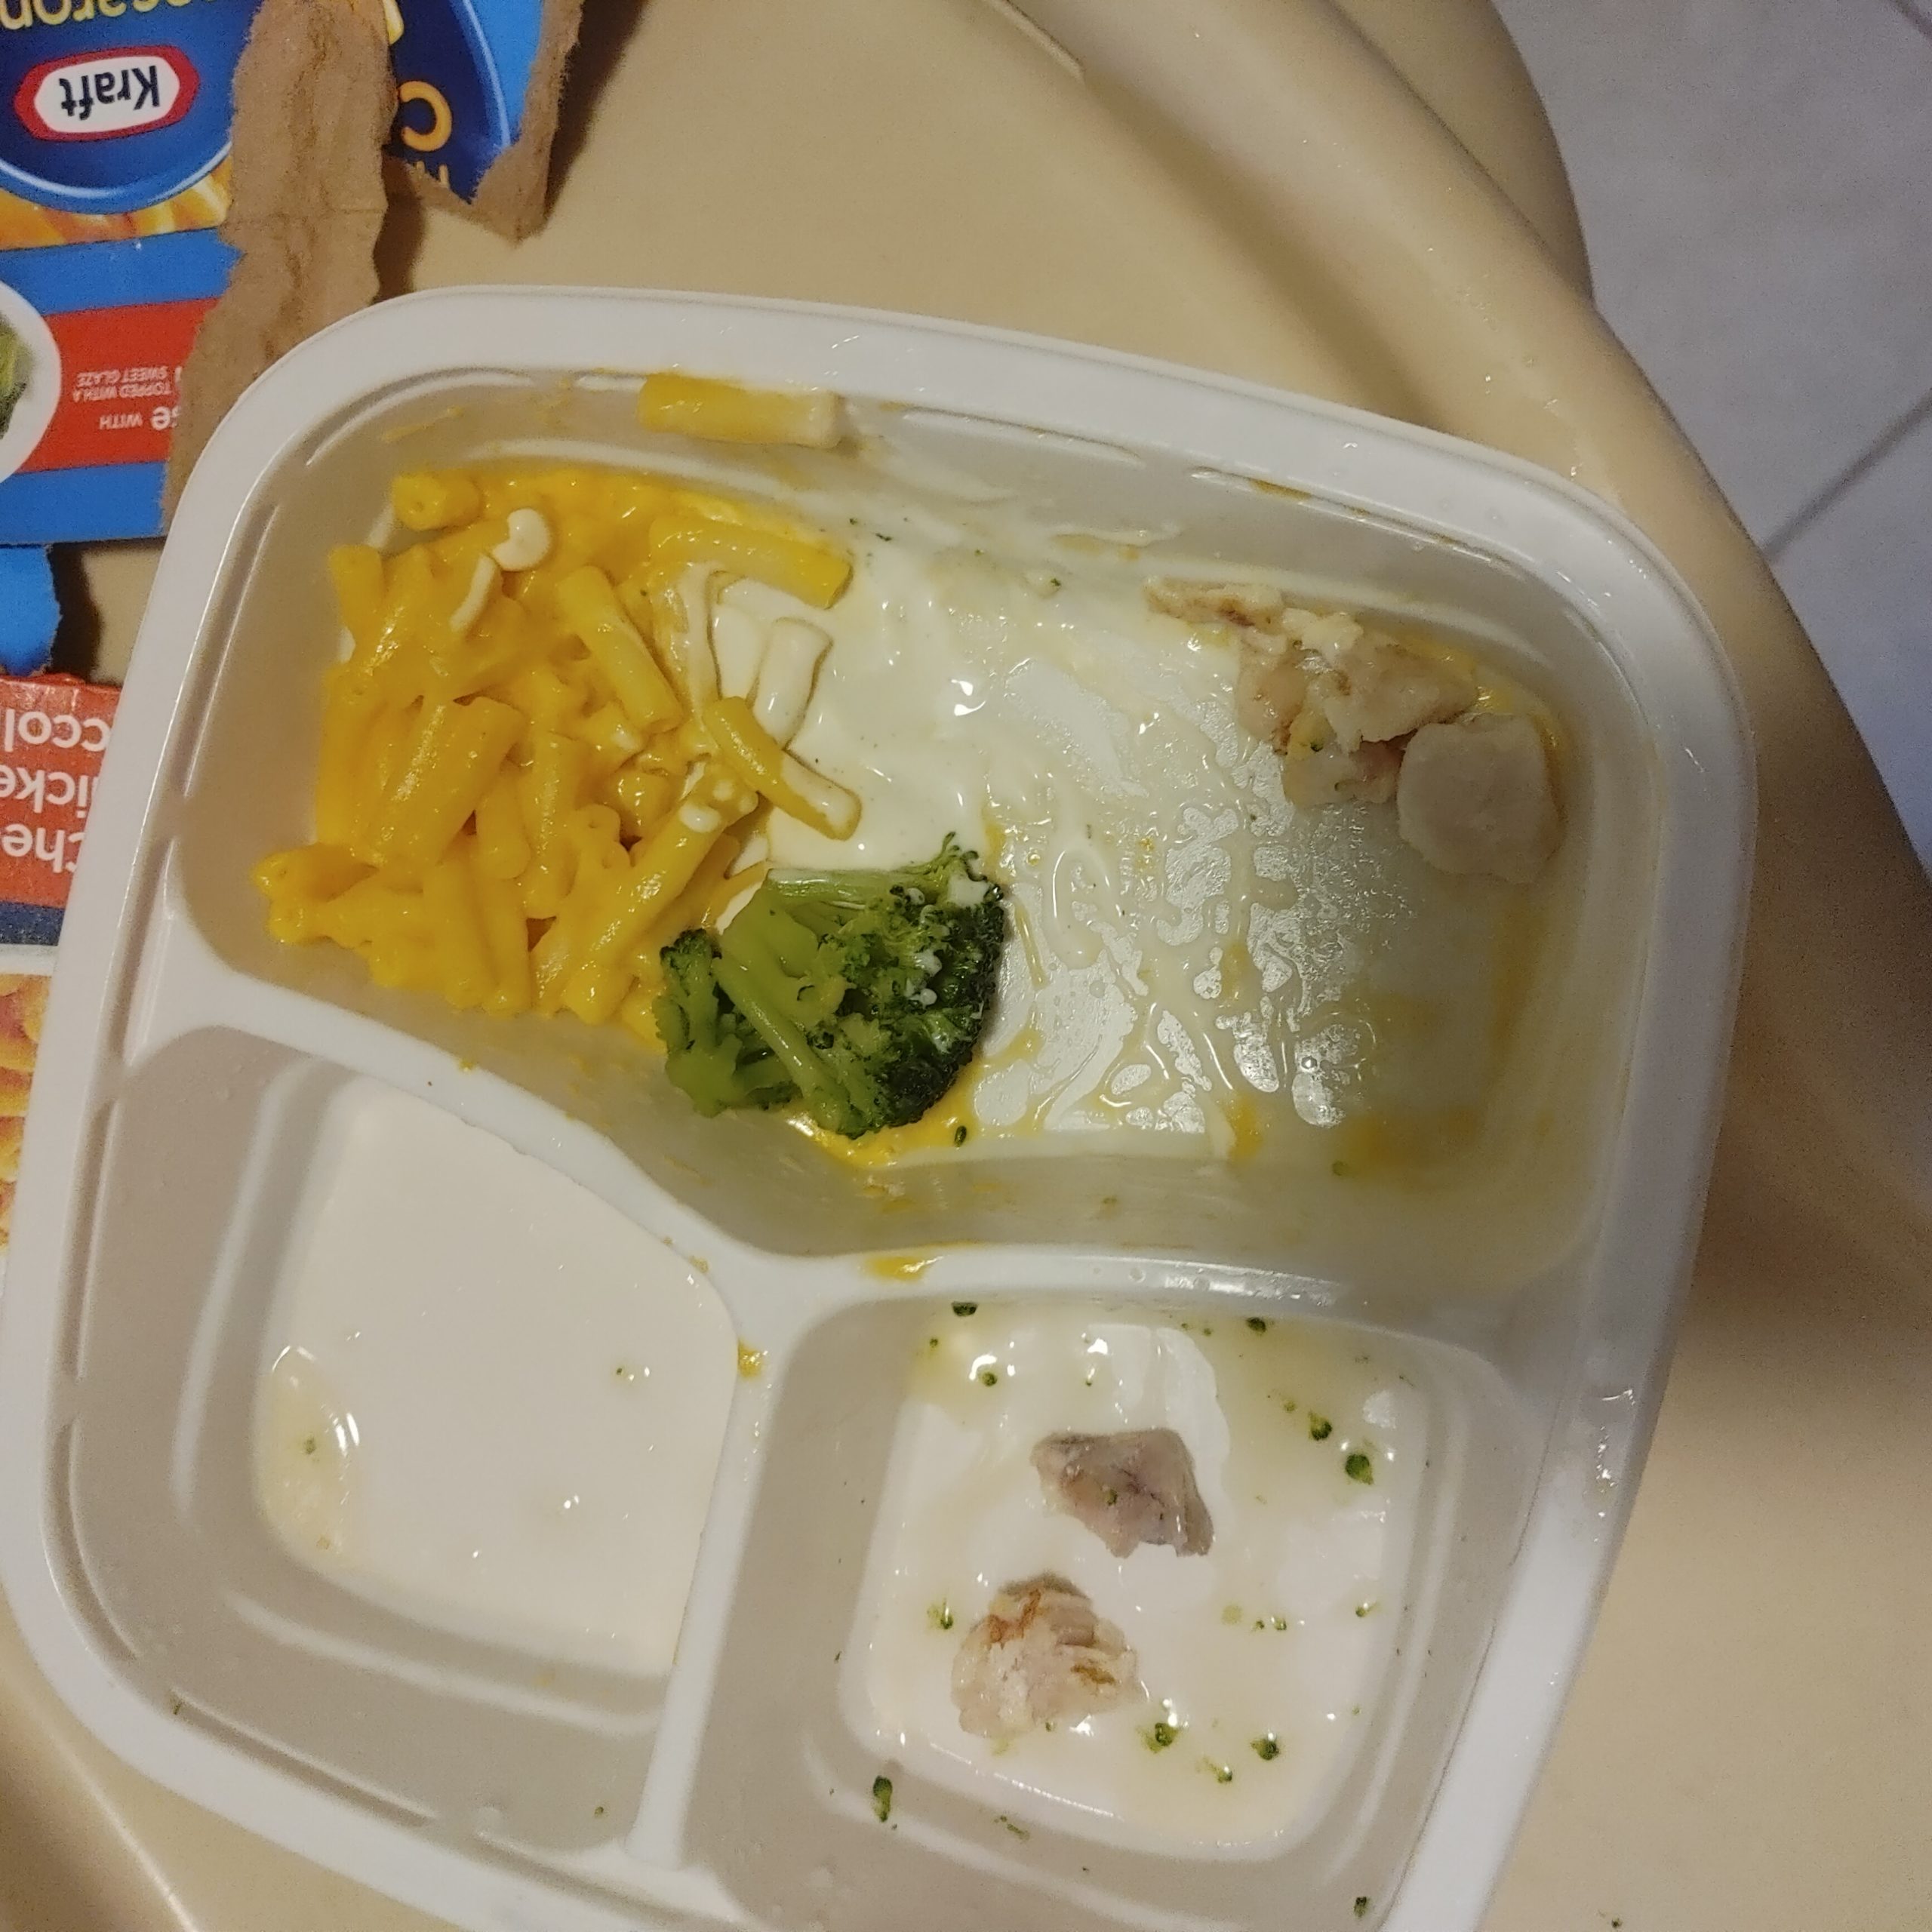 Kraft Mac & Cheese complaint Bone in frozen meal